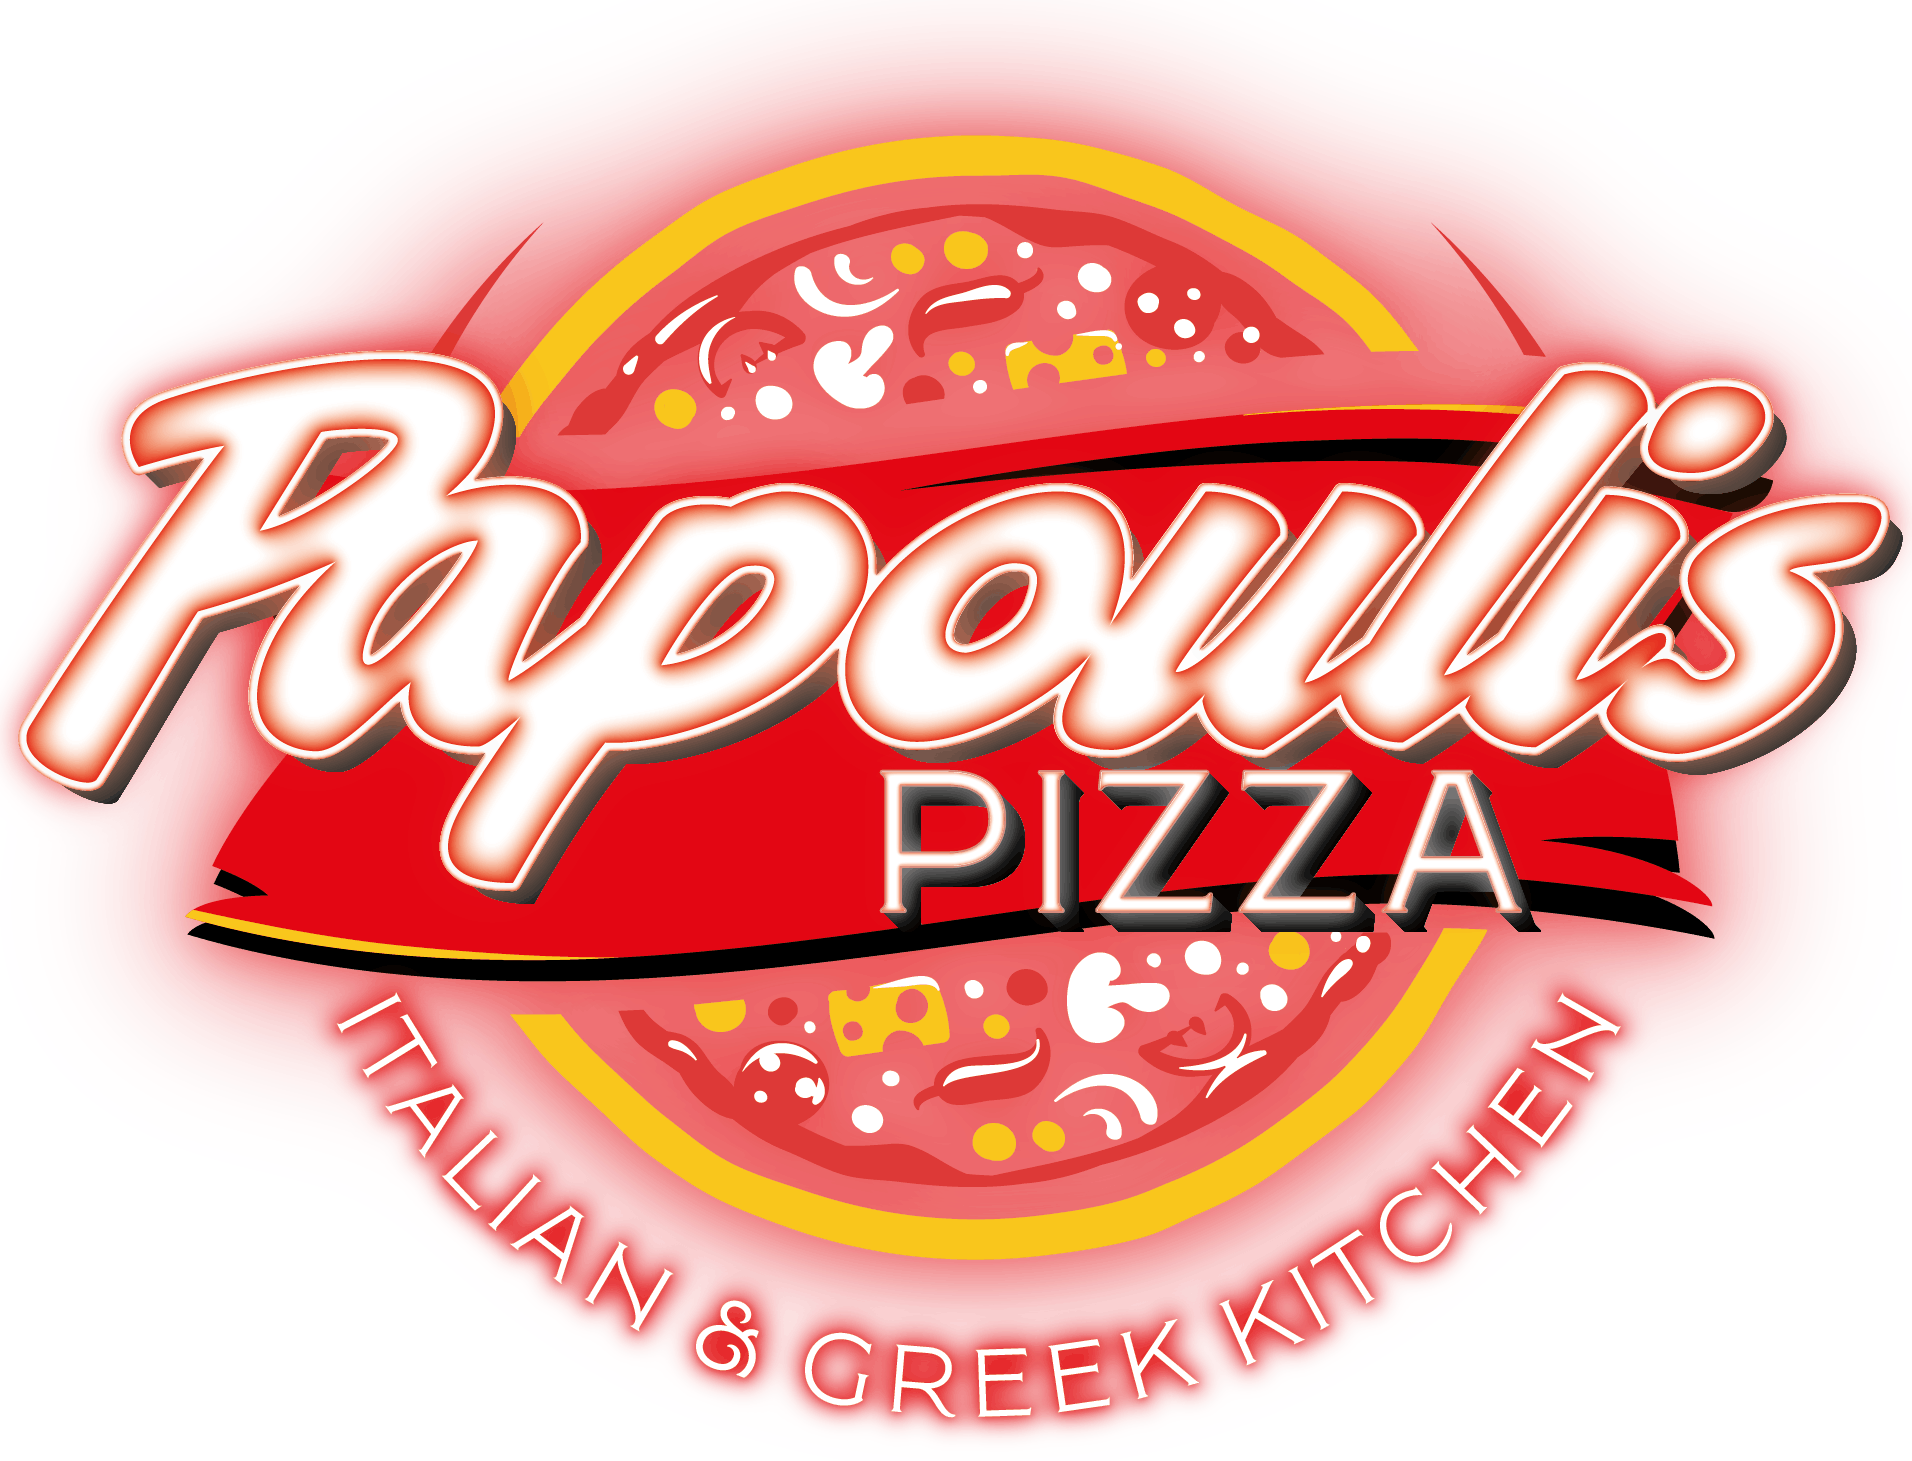 Papouli's Brick Oven Pizza & Restaurant